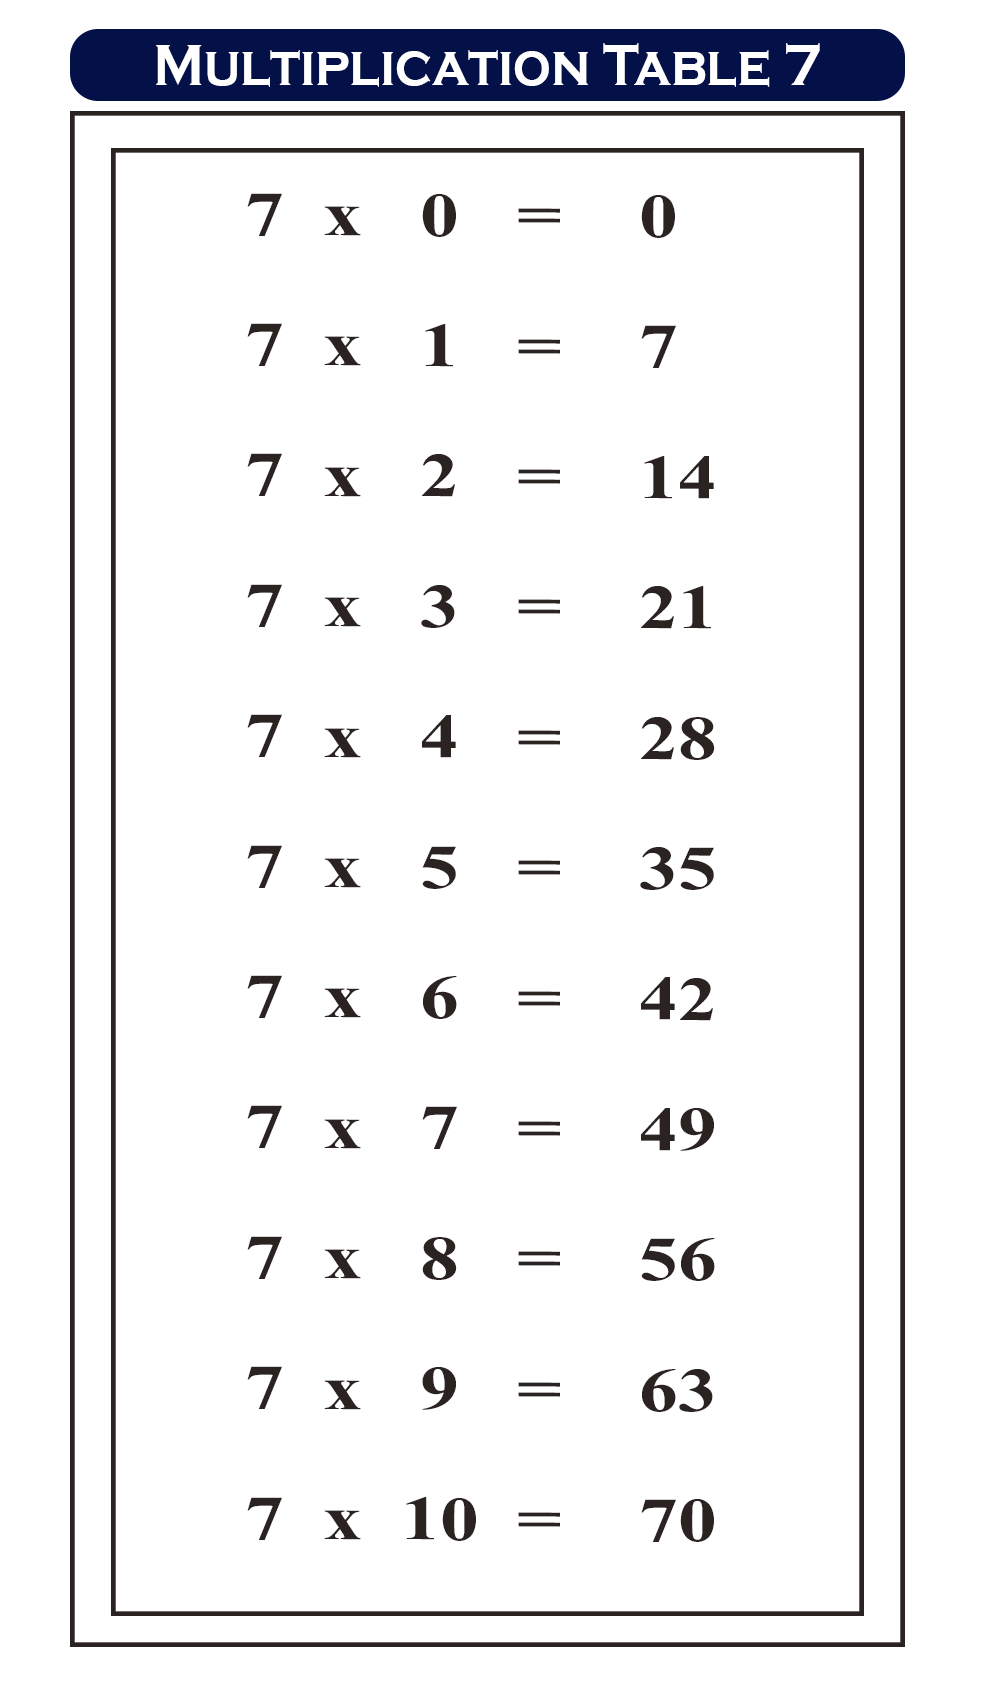 multiplication chart for 7